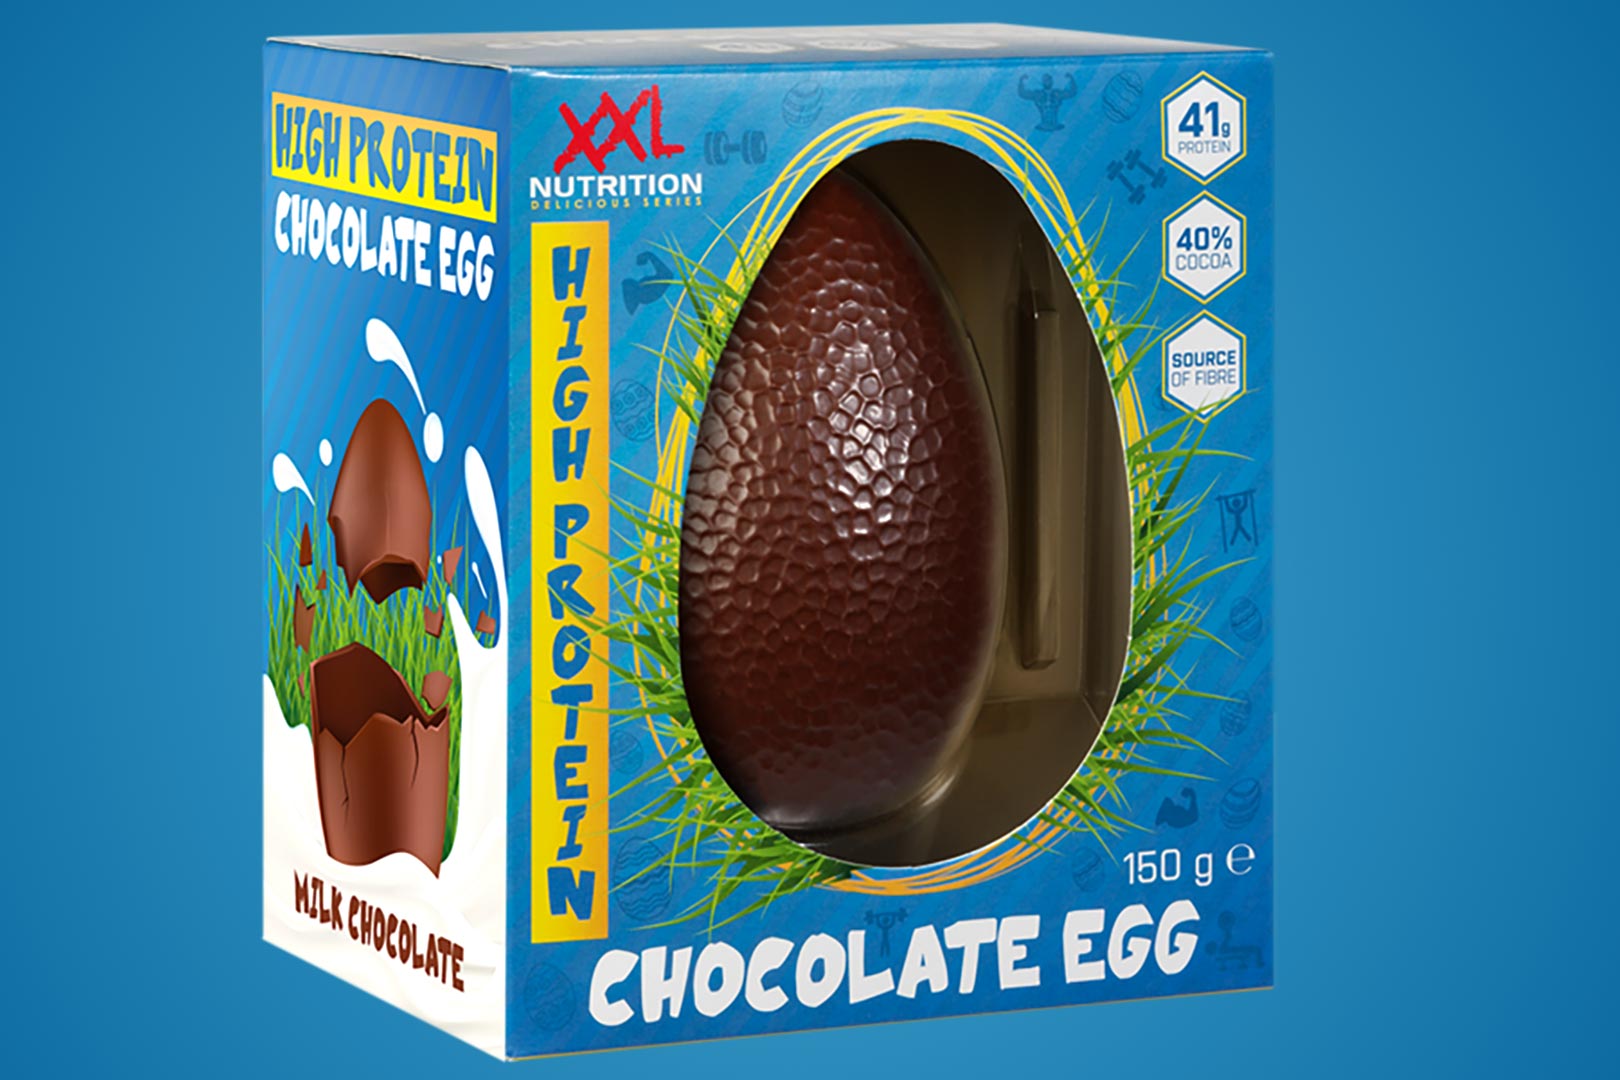 xxl nutrition protein chocolate egg